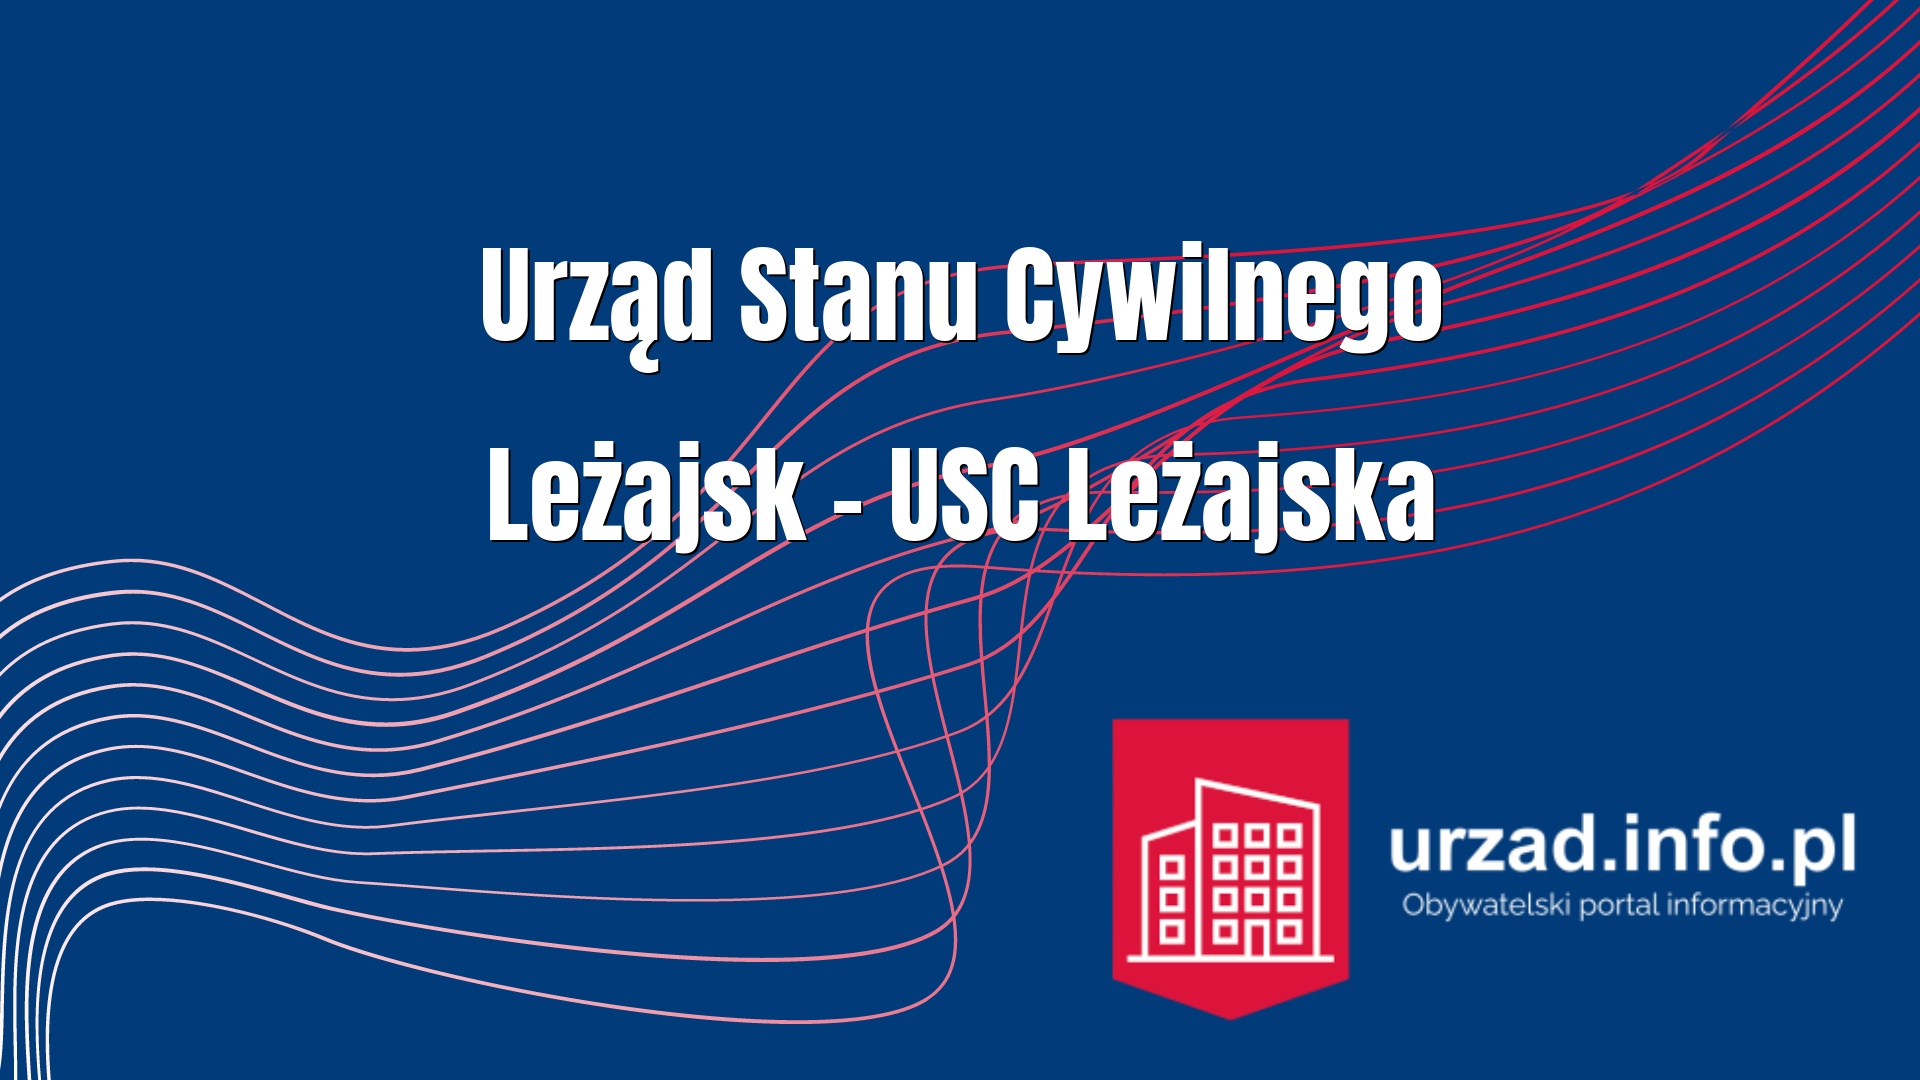 Urząd Stanu Cywilnego Leżajsk – USC Leżajska